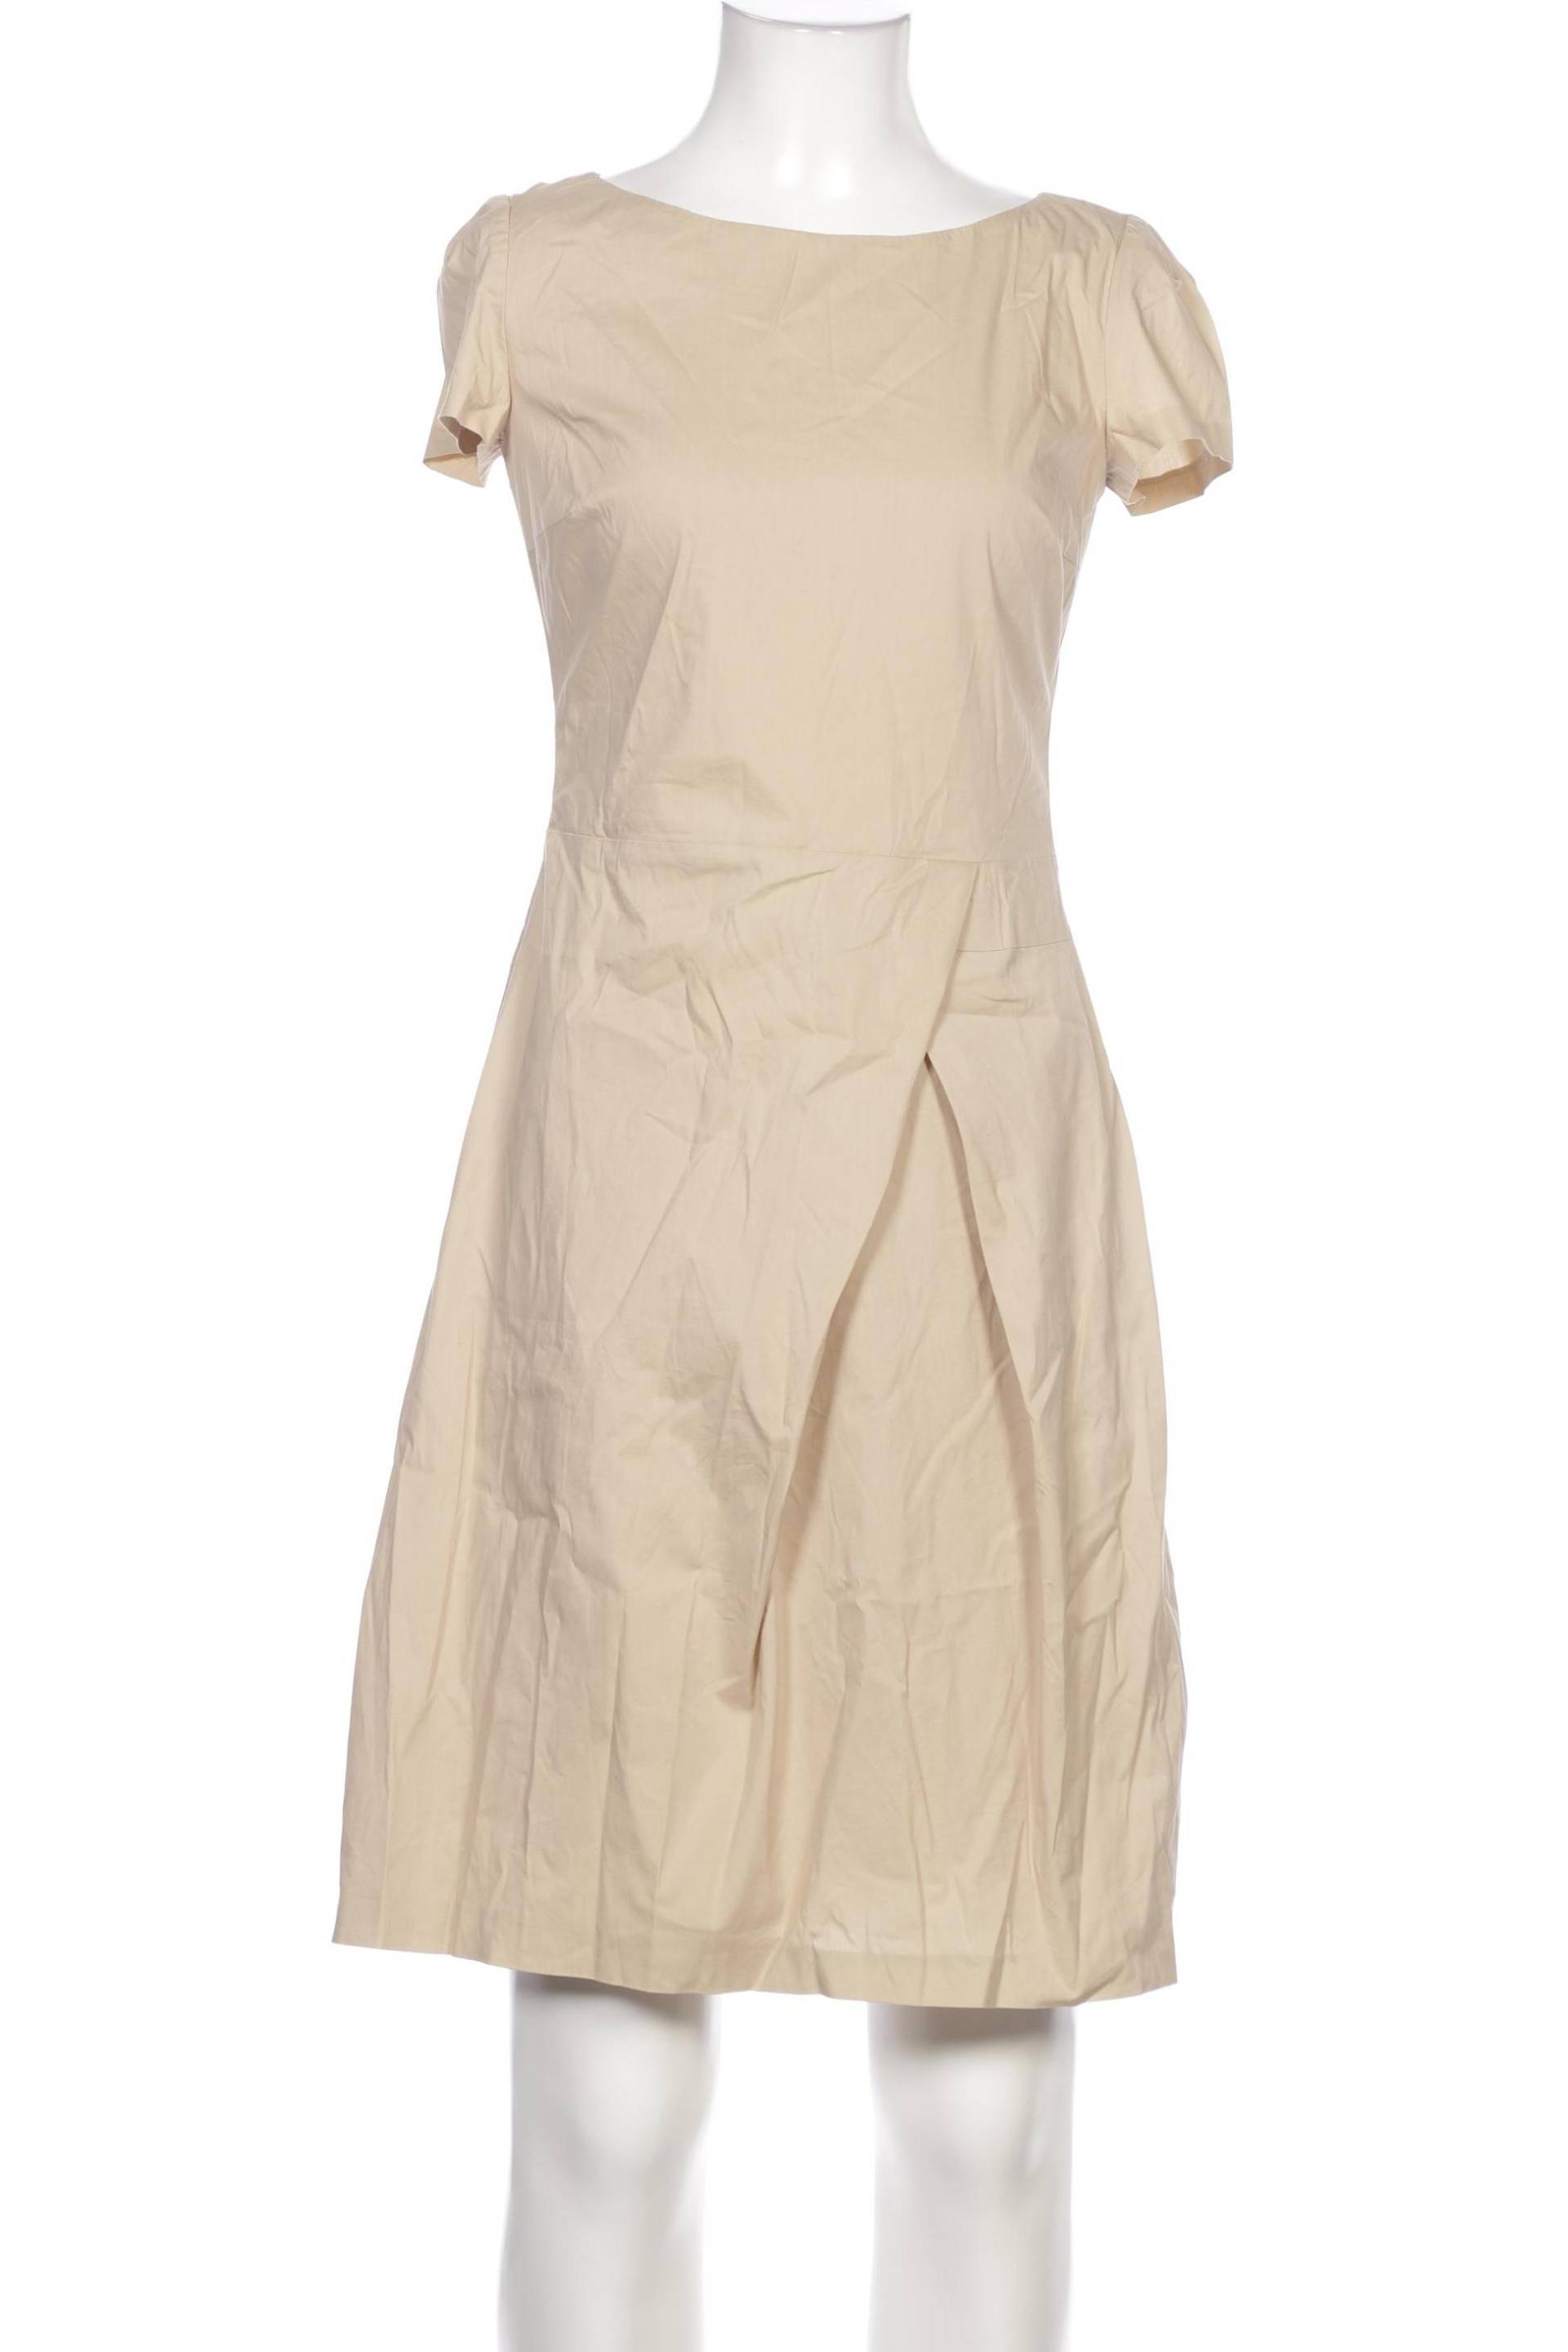 Rene Lezard Damen Kleid, beige, Gr. 34 von RENE LEZARD